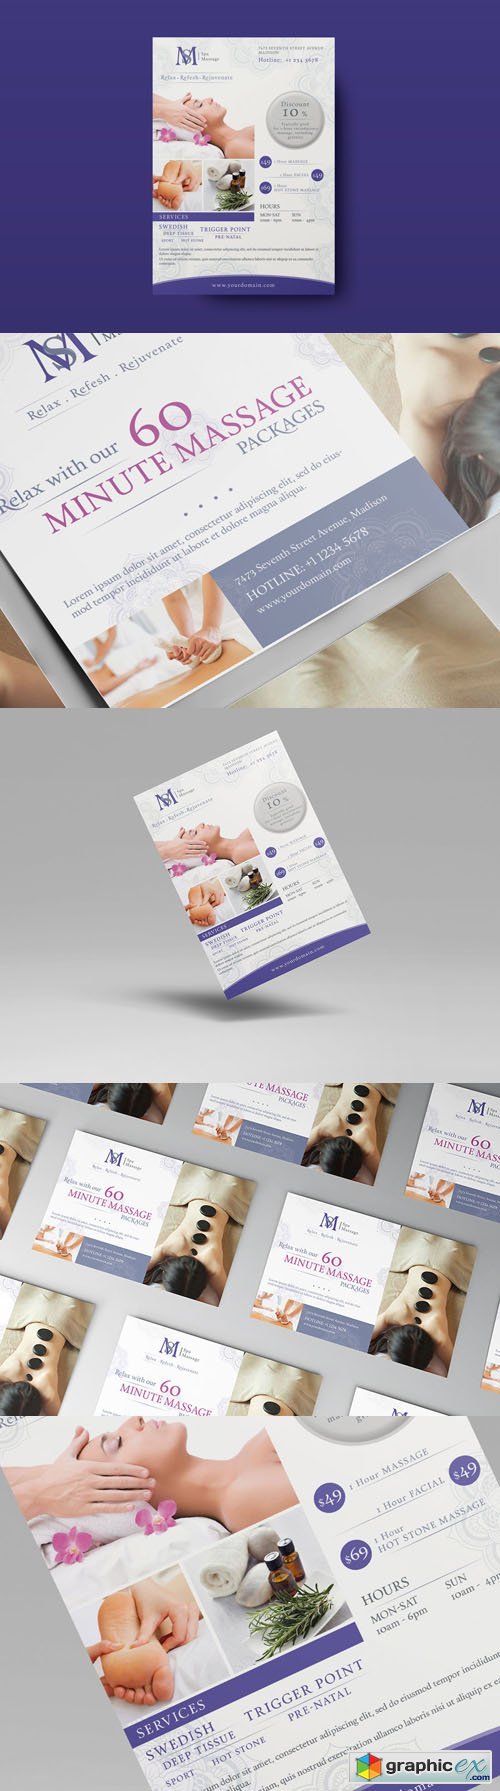 Massage - Ad & Flyer Template